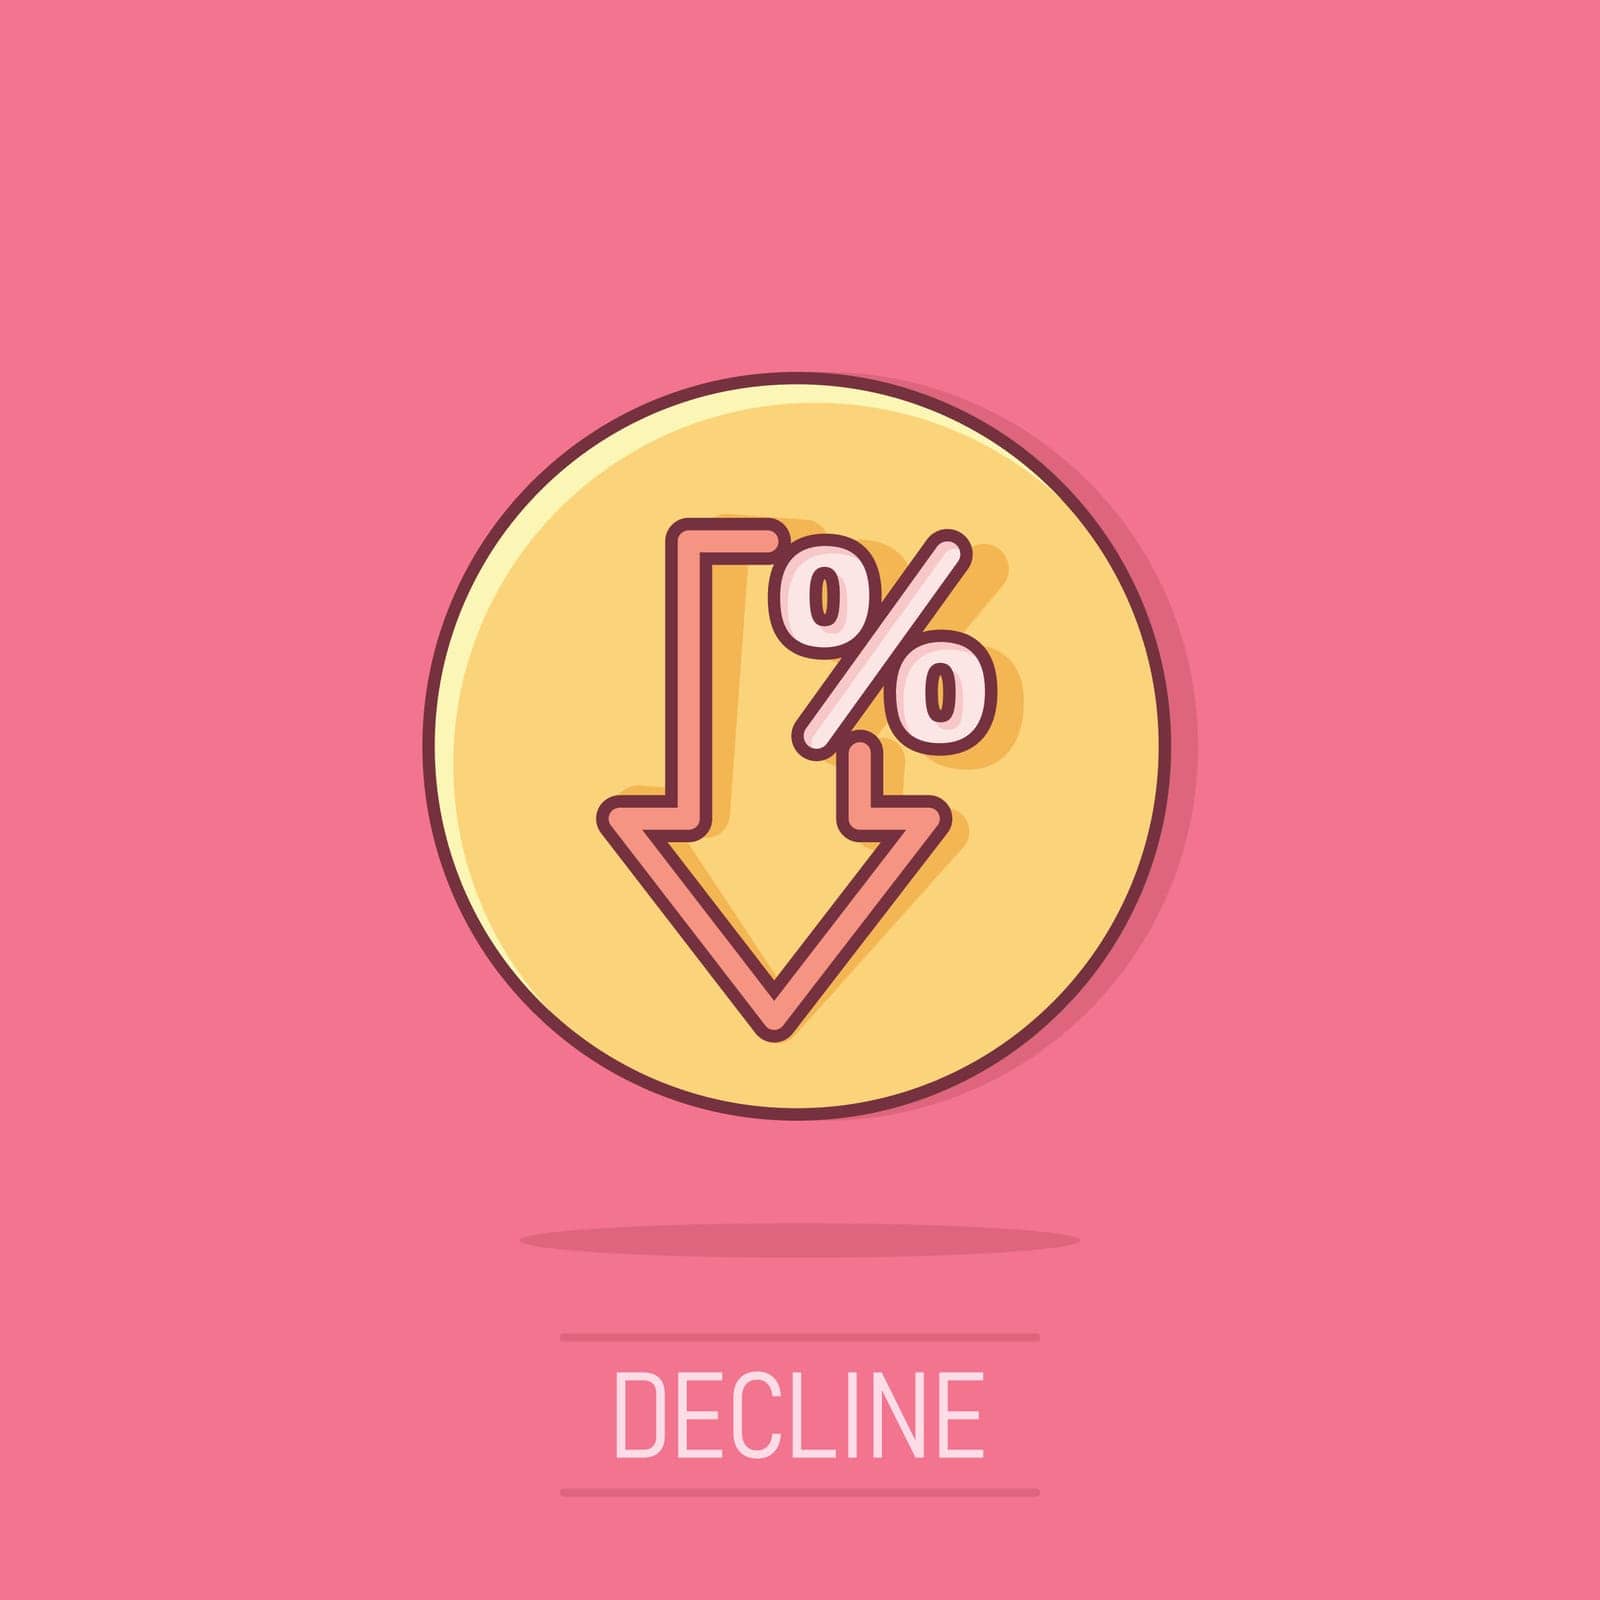 Decline arrow icon in comic style. Decrease cartoon vector illustration on isolated background. Revenue model splash effect business concept.